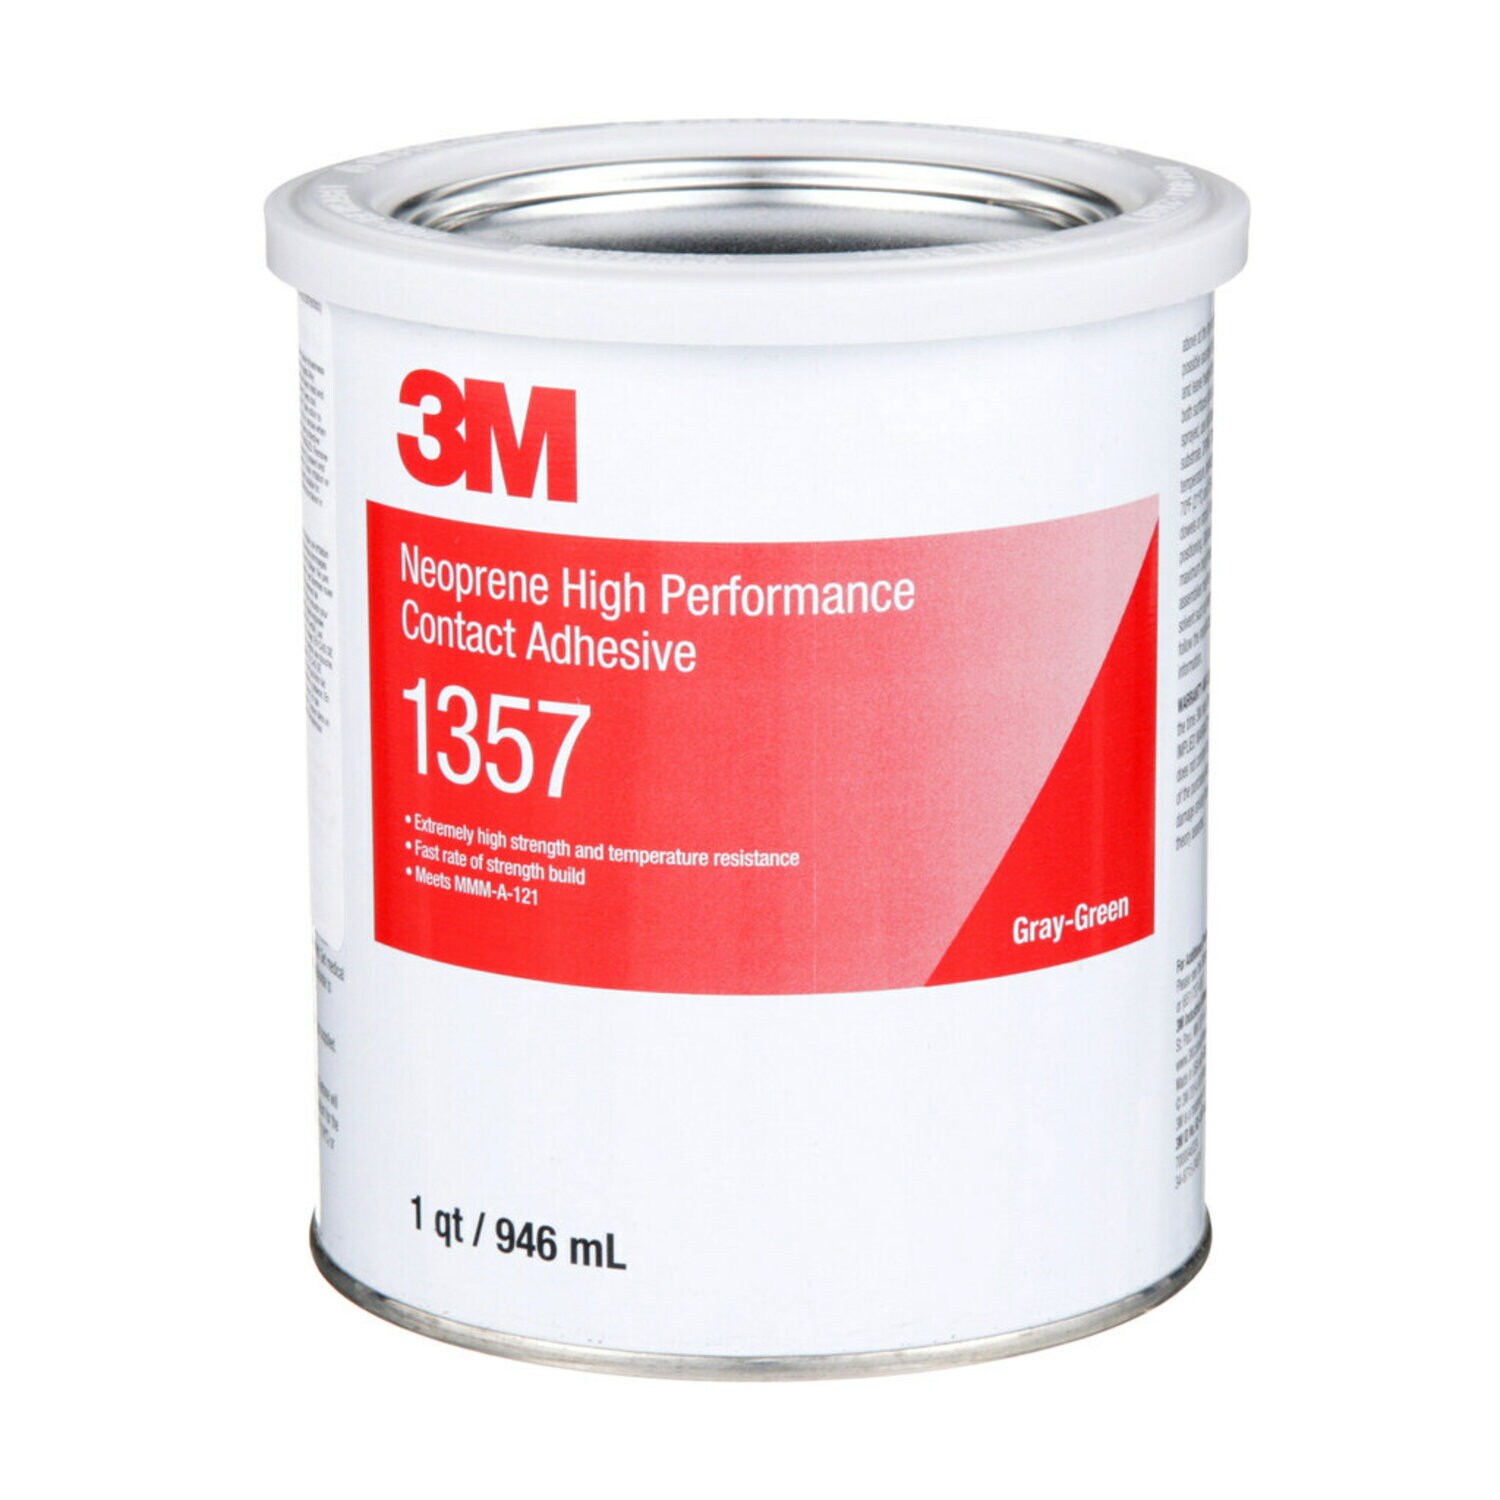 7000046324 - 3M Neoprene High Performance Contact Adhesive 1357, Gray-Green, 1 QuartCan, 12/case